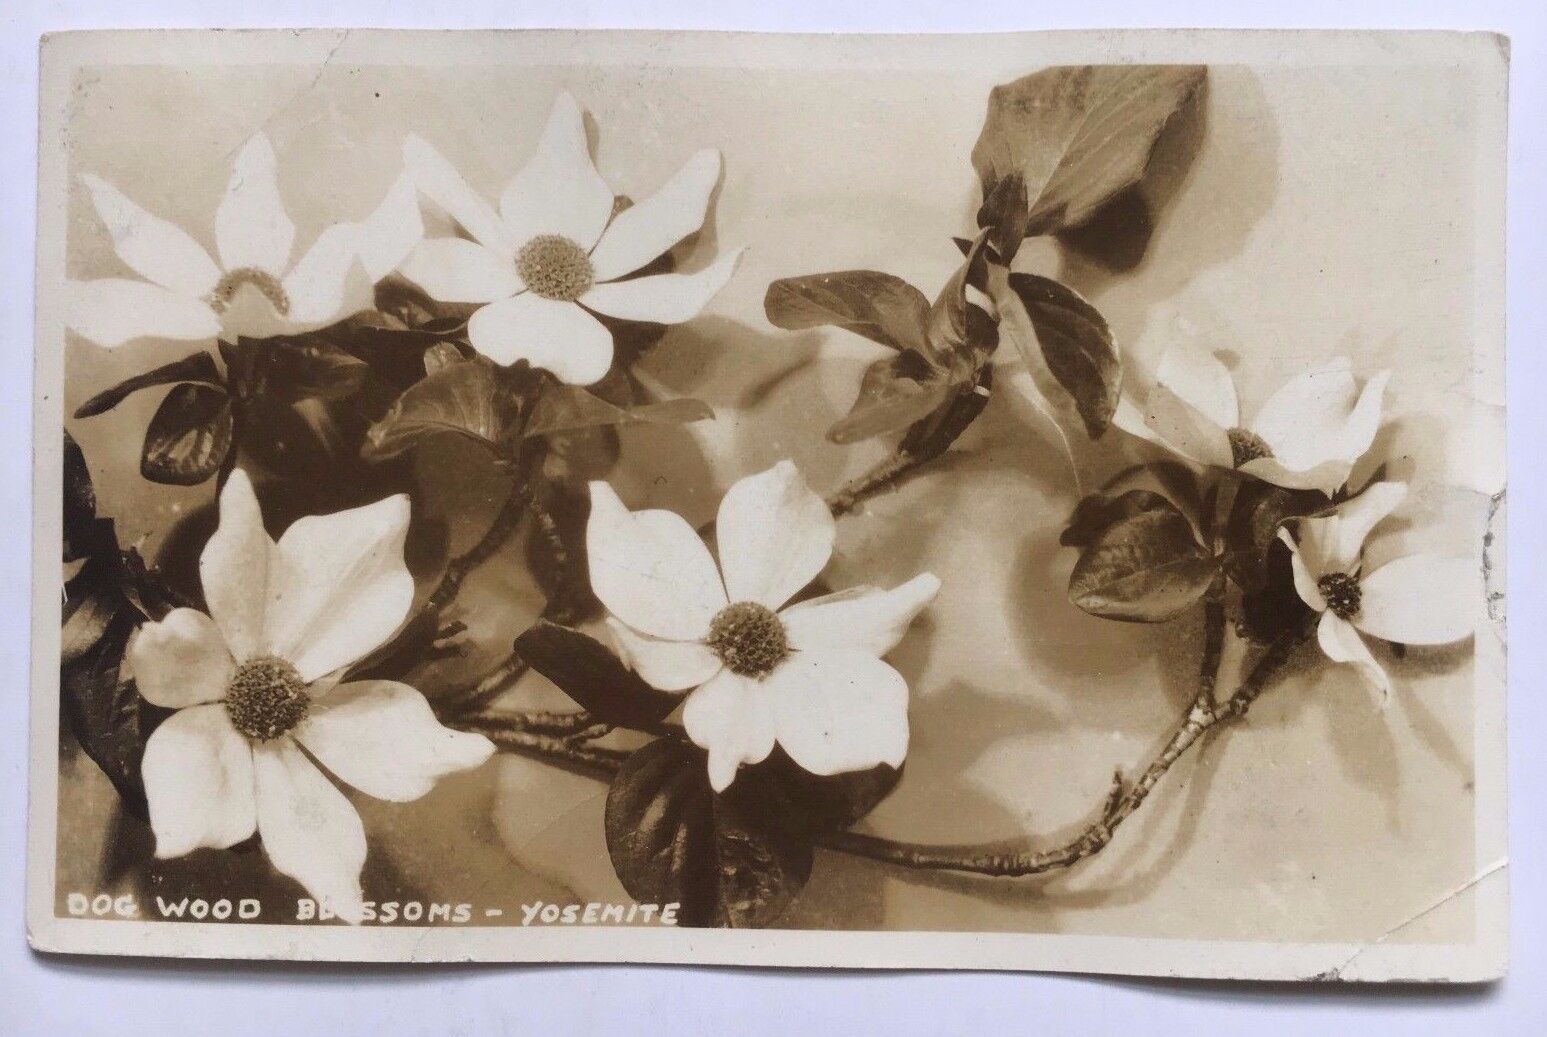 1939 Dogwood Blossoms Yosemite California RPPC Real Photo Postcard Post. Used